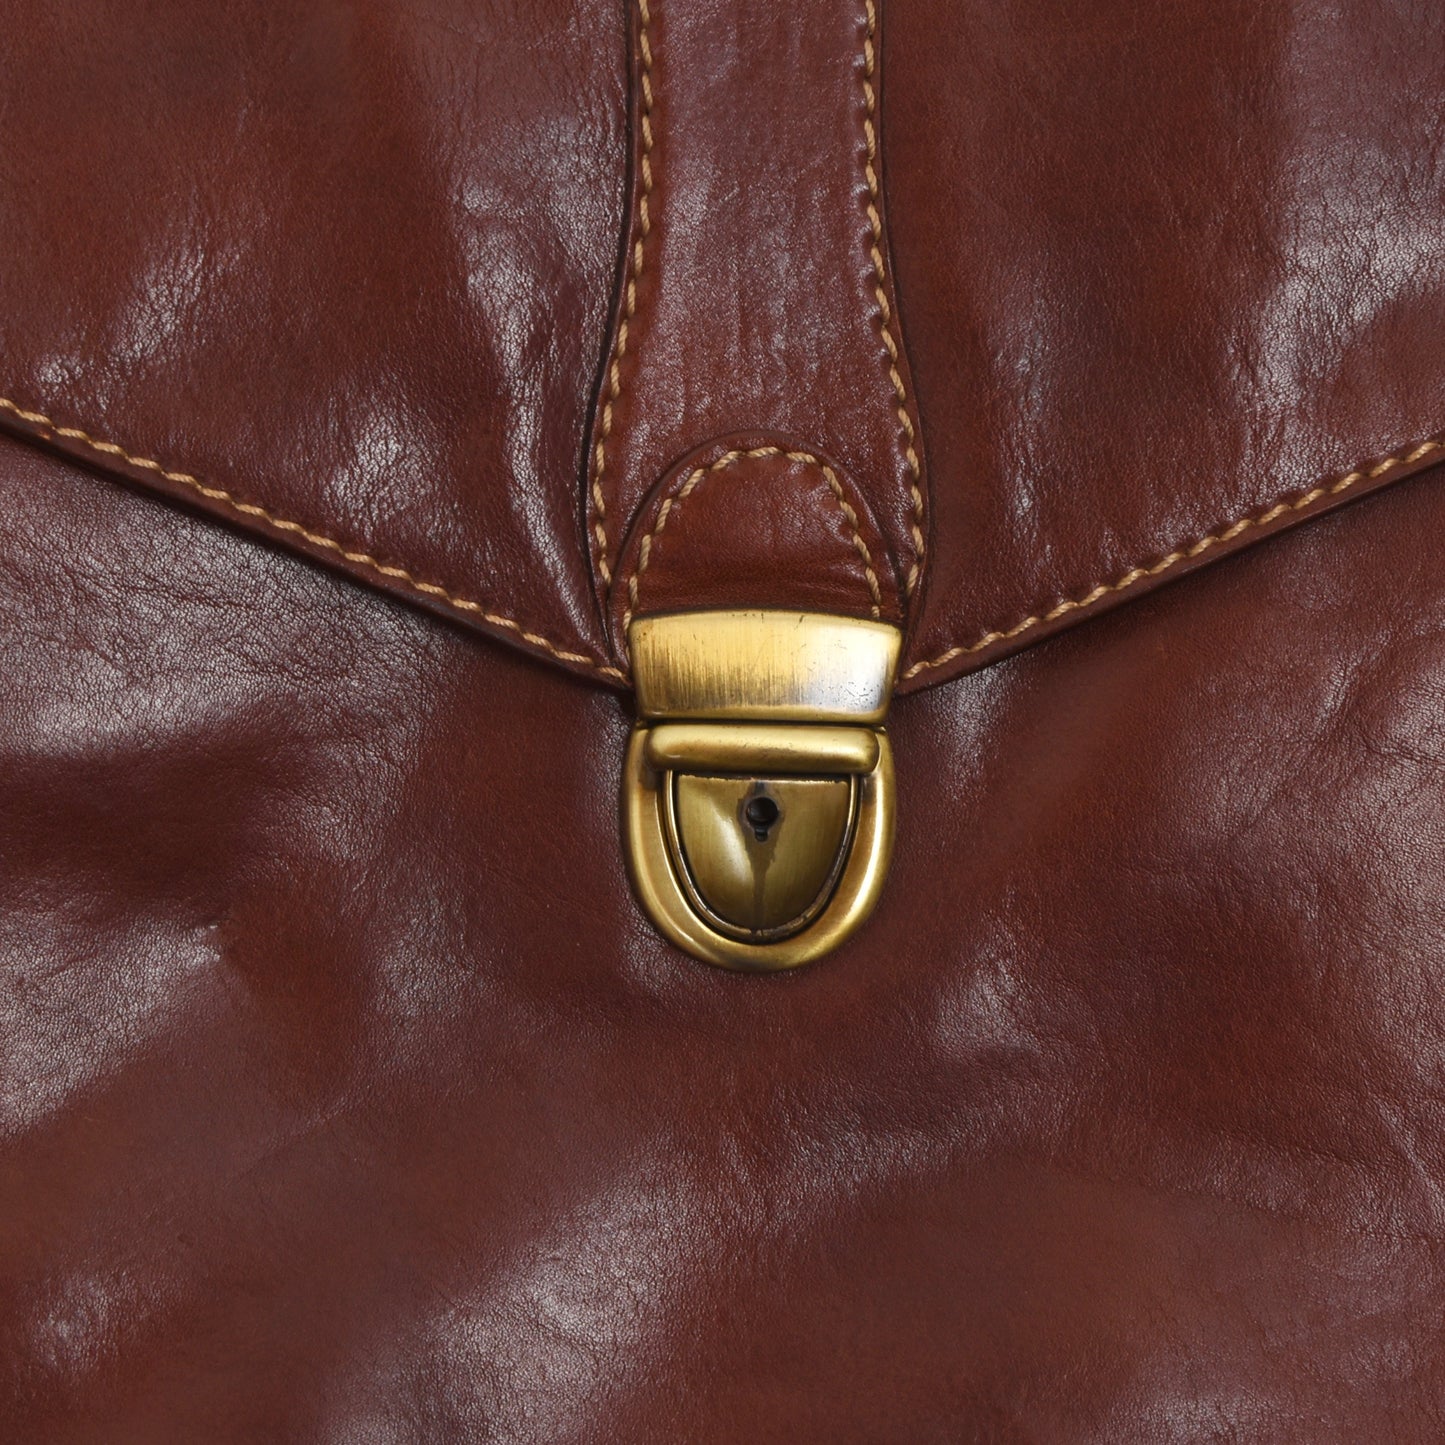 Rustic Leather Document Holder - Saddle Tan